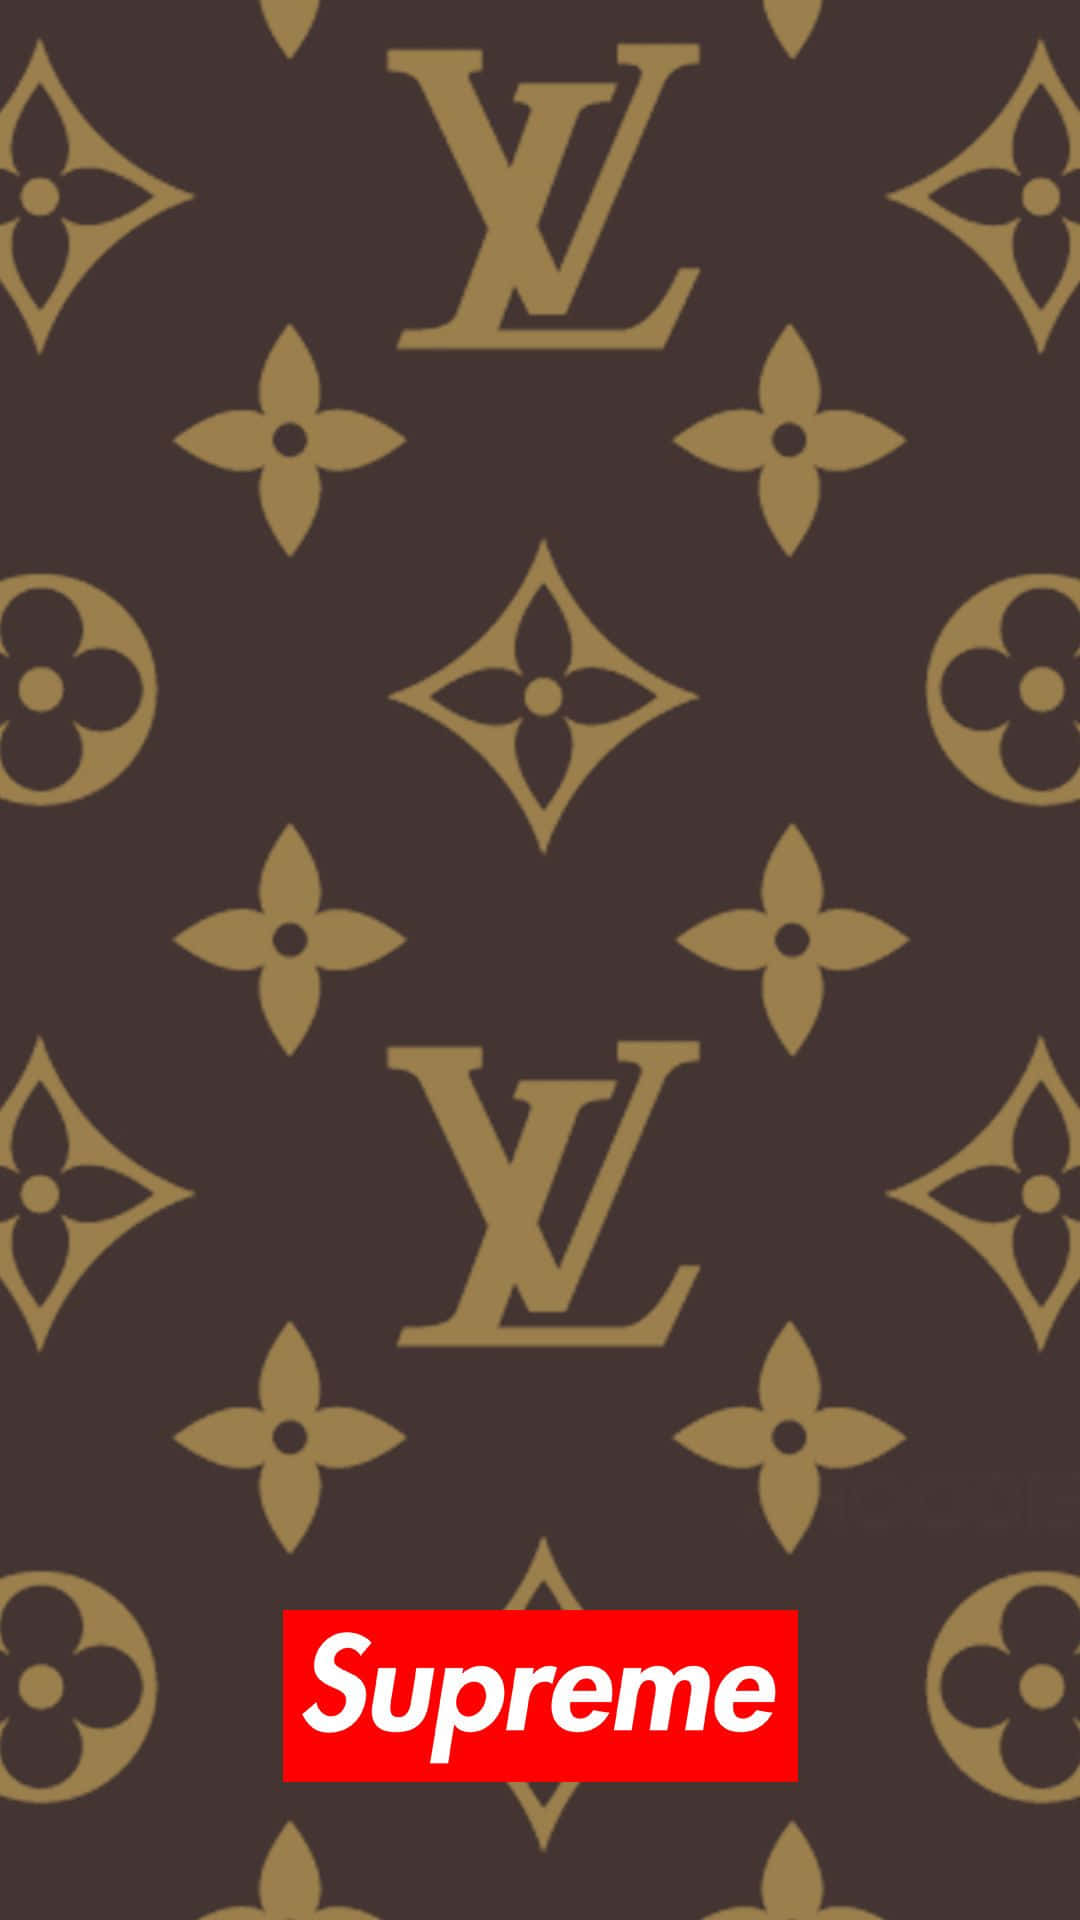 Luxury Meets Technology - A Classic Louis Vuitton Desktop Background Wallpaper